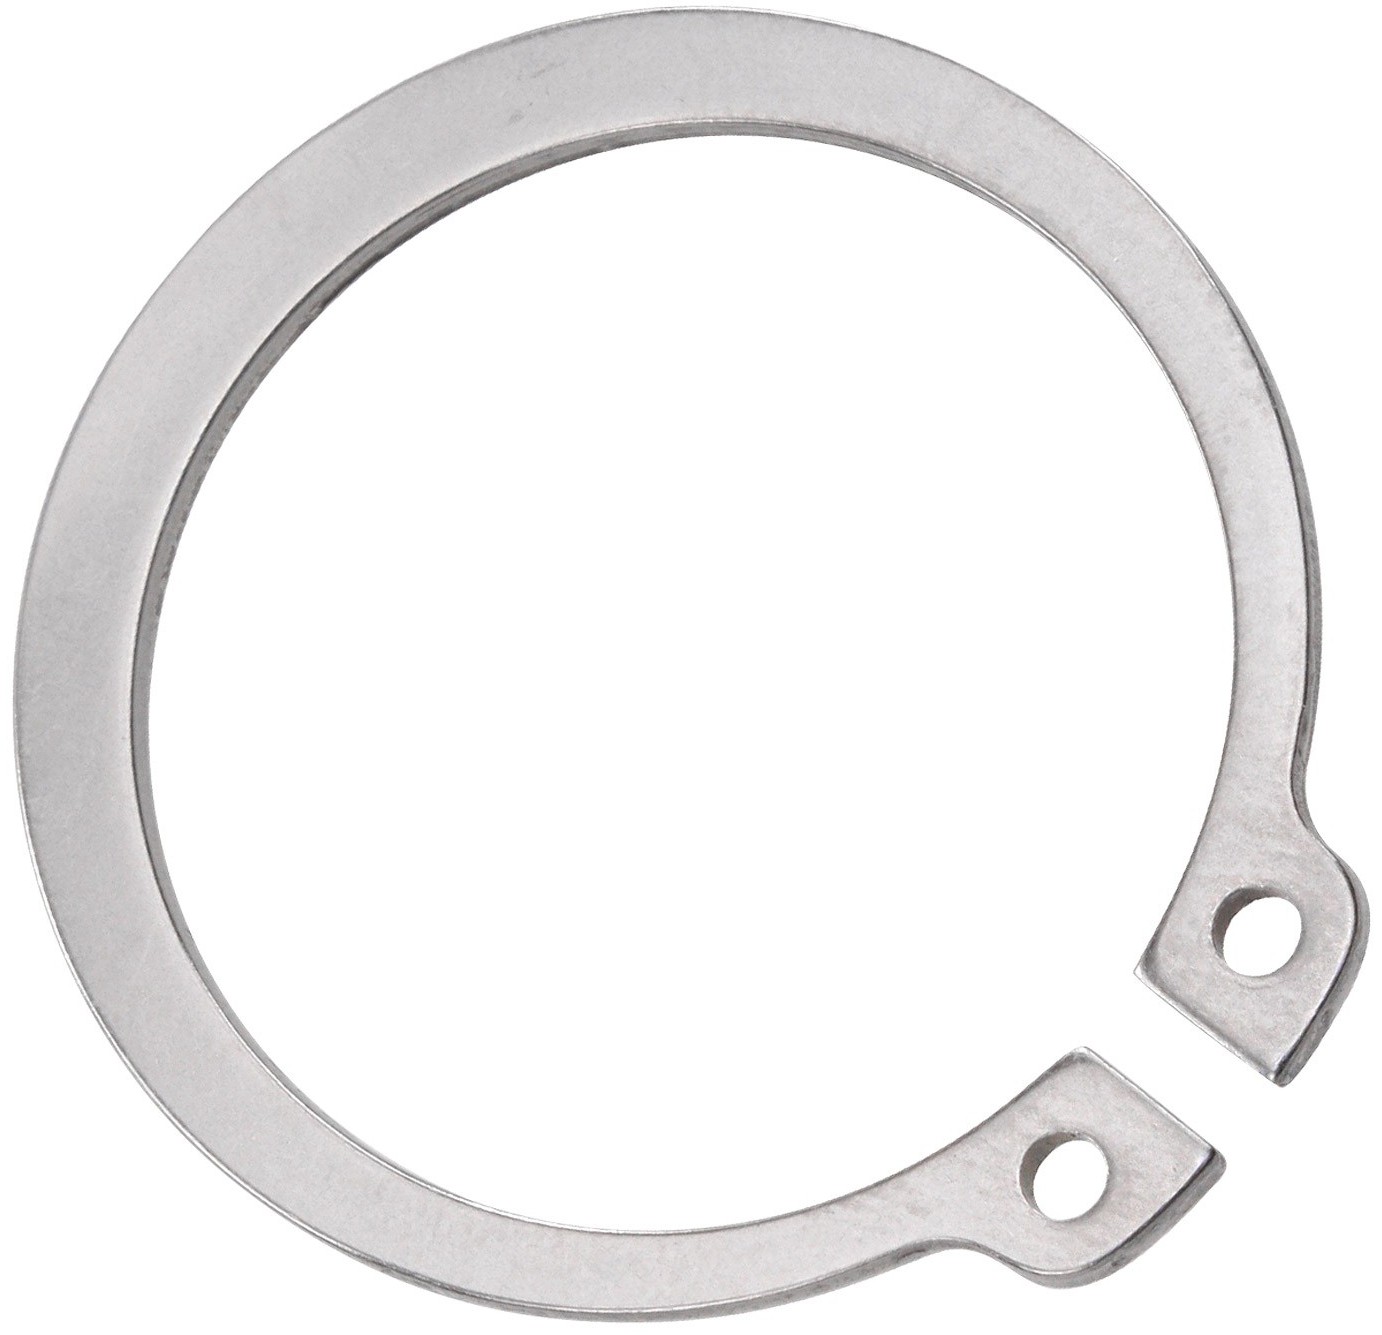 Кольцо стопорное наружное 21х1,2 DIN 471, нержавеющая сталь 1.4122 (А2) - фото